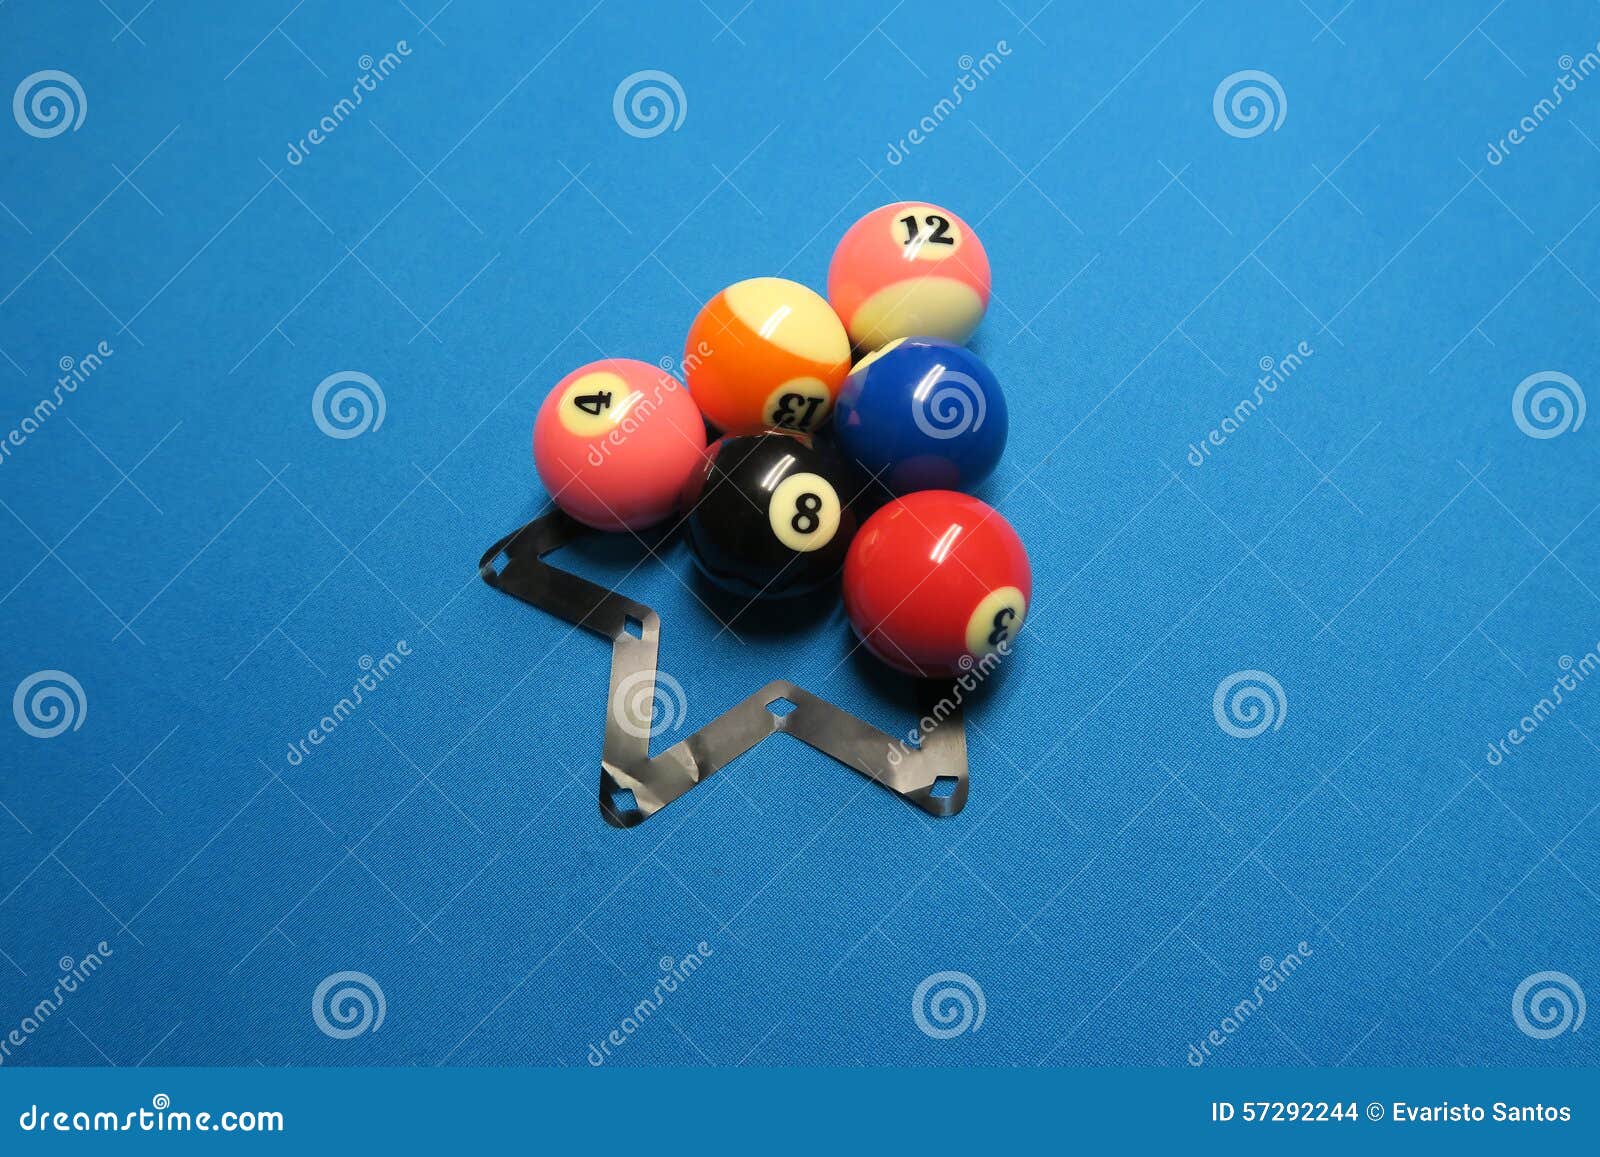 Snooker balls stock photo